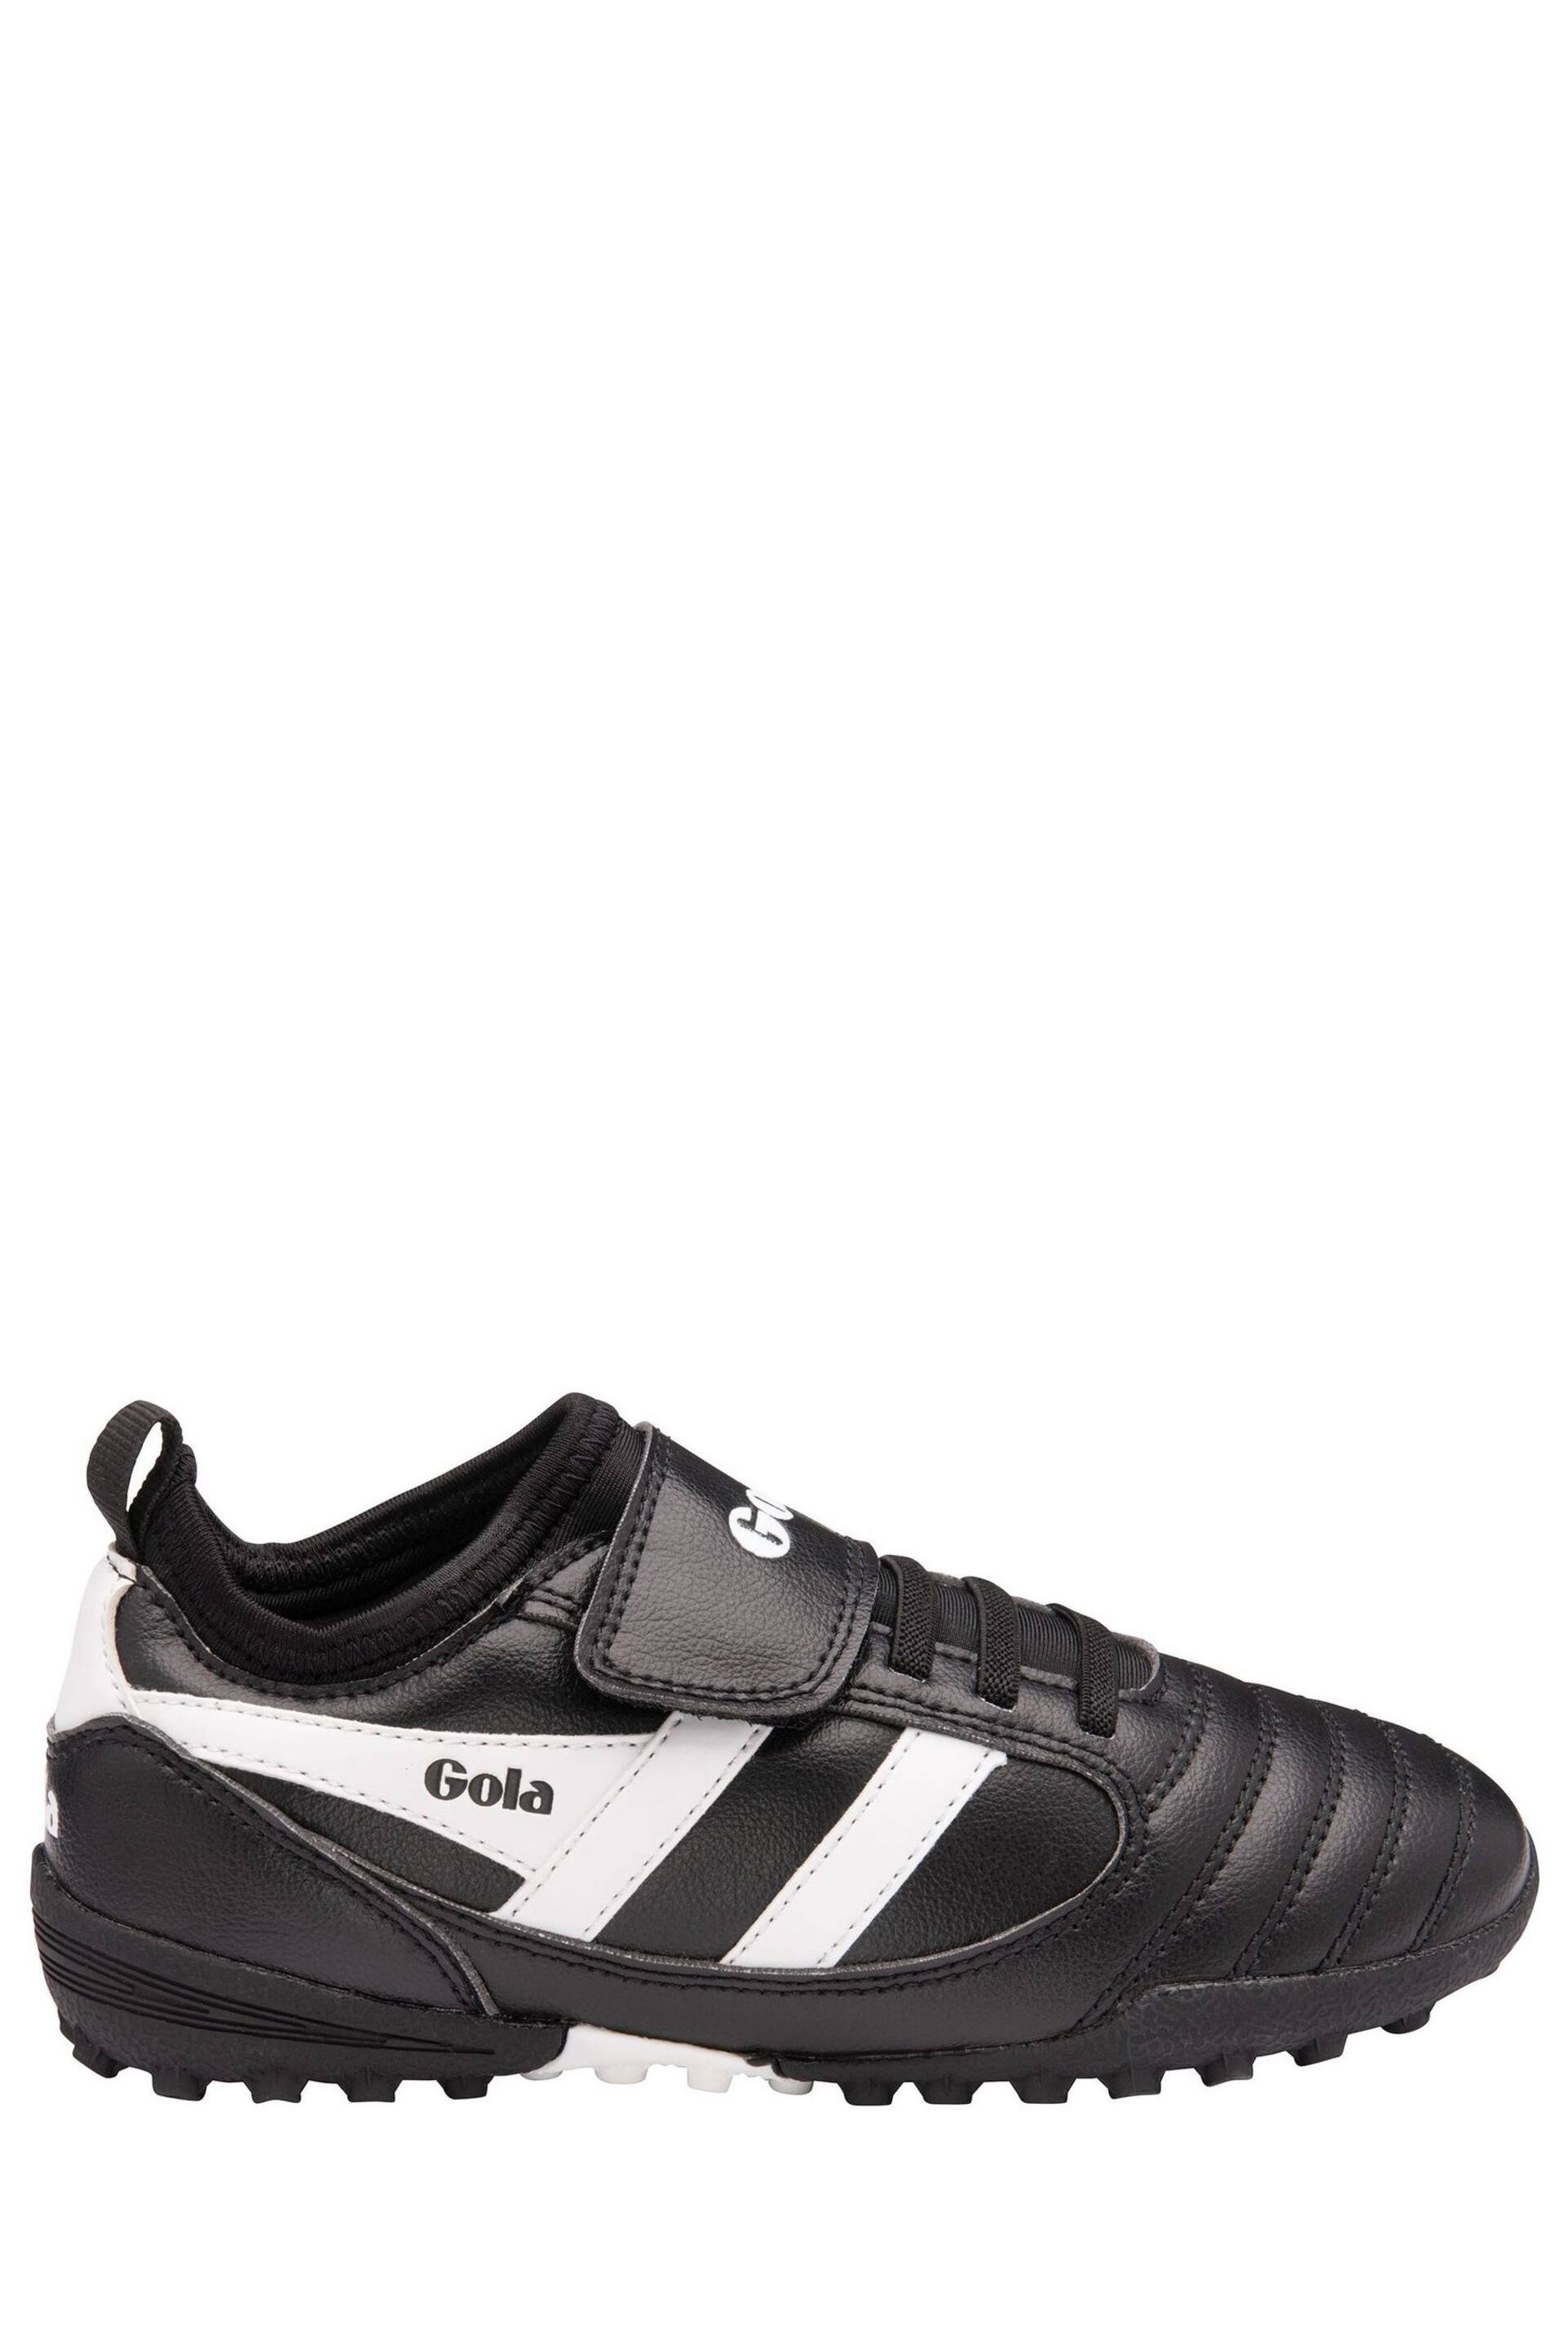 Gola Black/White Kids Ceptor Turf Microfibre Quick Fasten Football Boots - Image 1 of 5